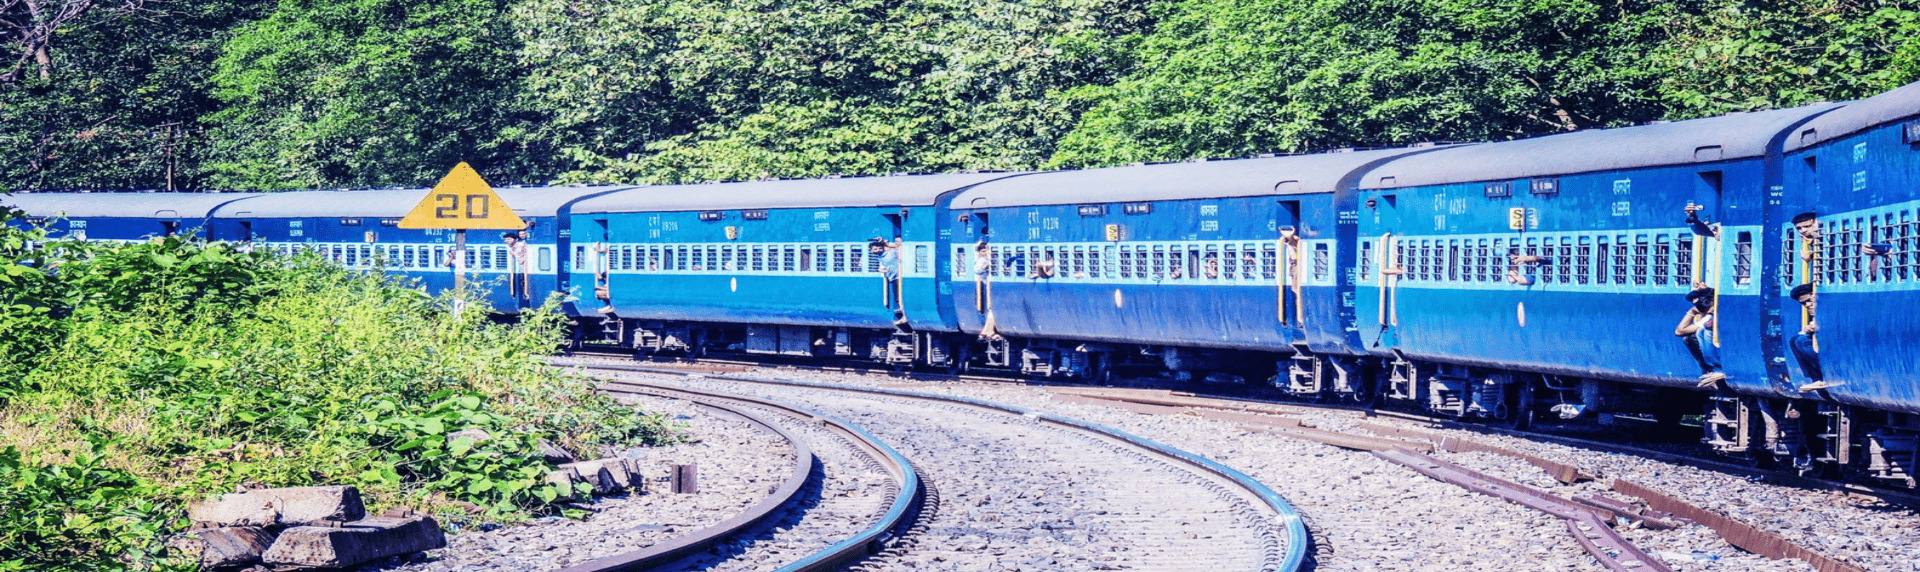 Running train at Kotdwar railway station in Uttarakhand